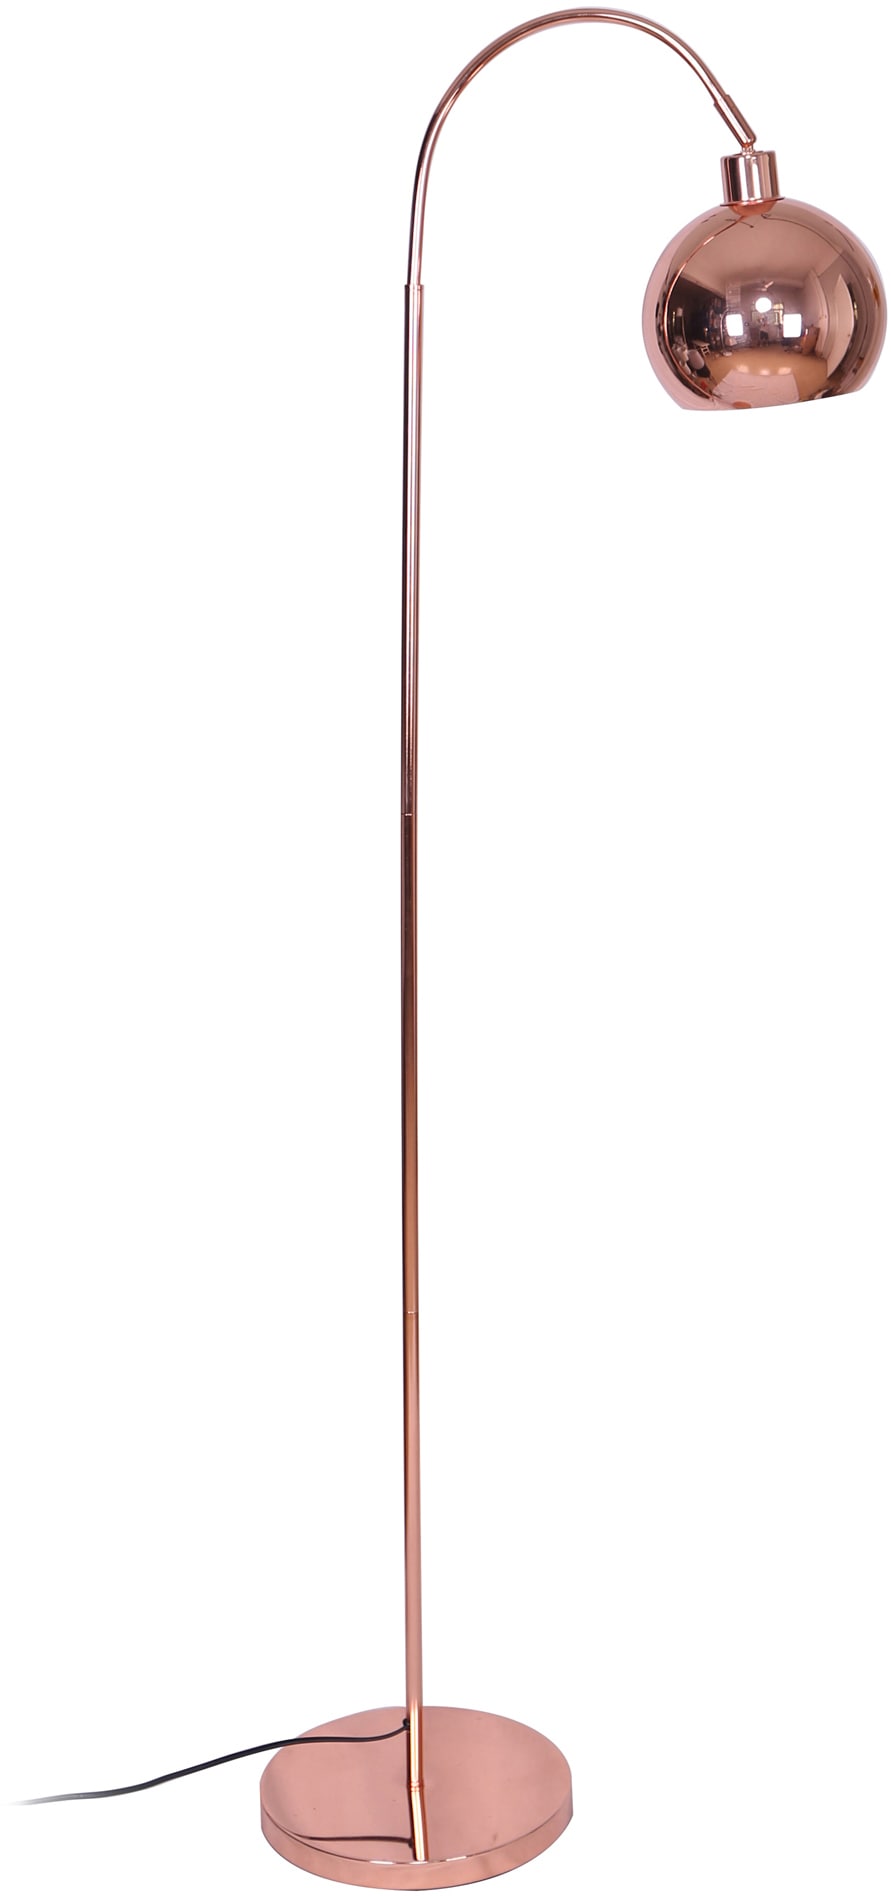 Stehlampe »Pepe«, 1 flammig-flammig, Gestell und Schirm in Kupferoptik gebürstet